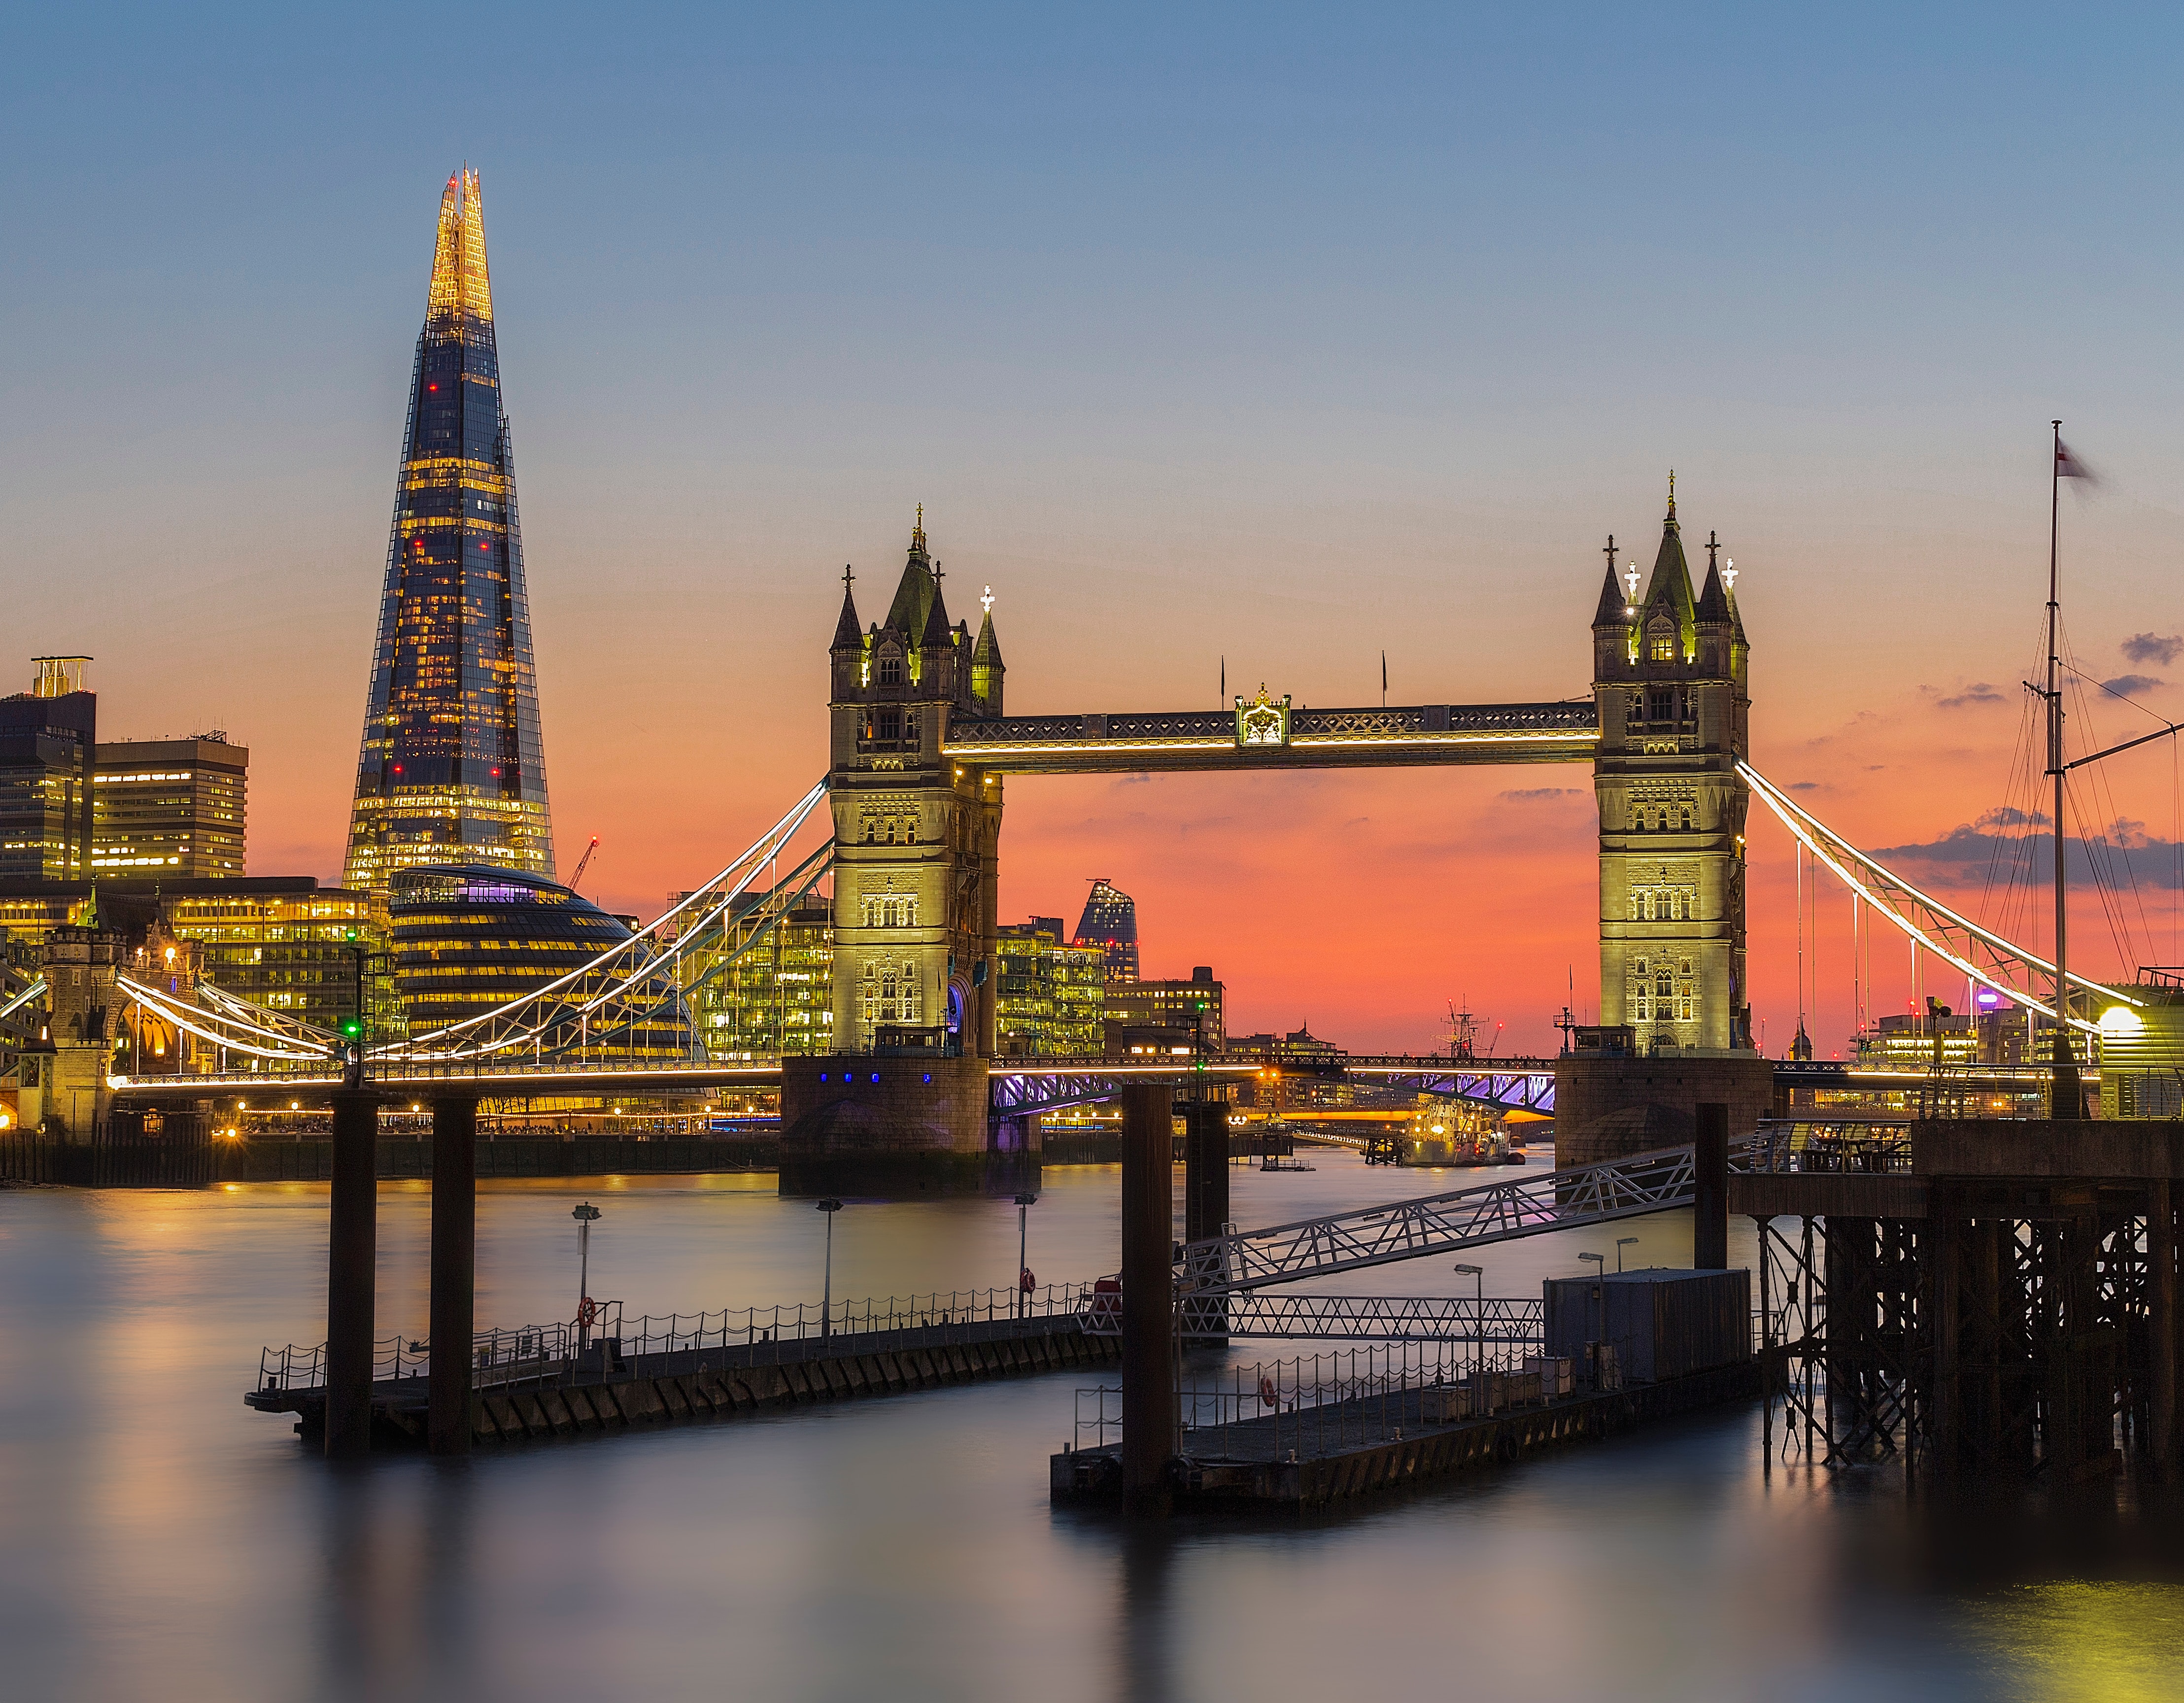 Tower Bridge sunset, London, England